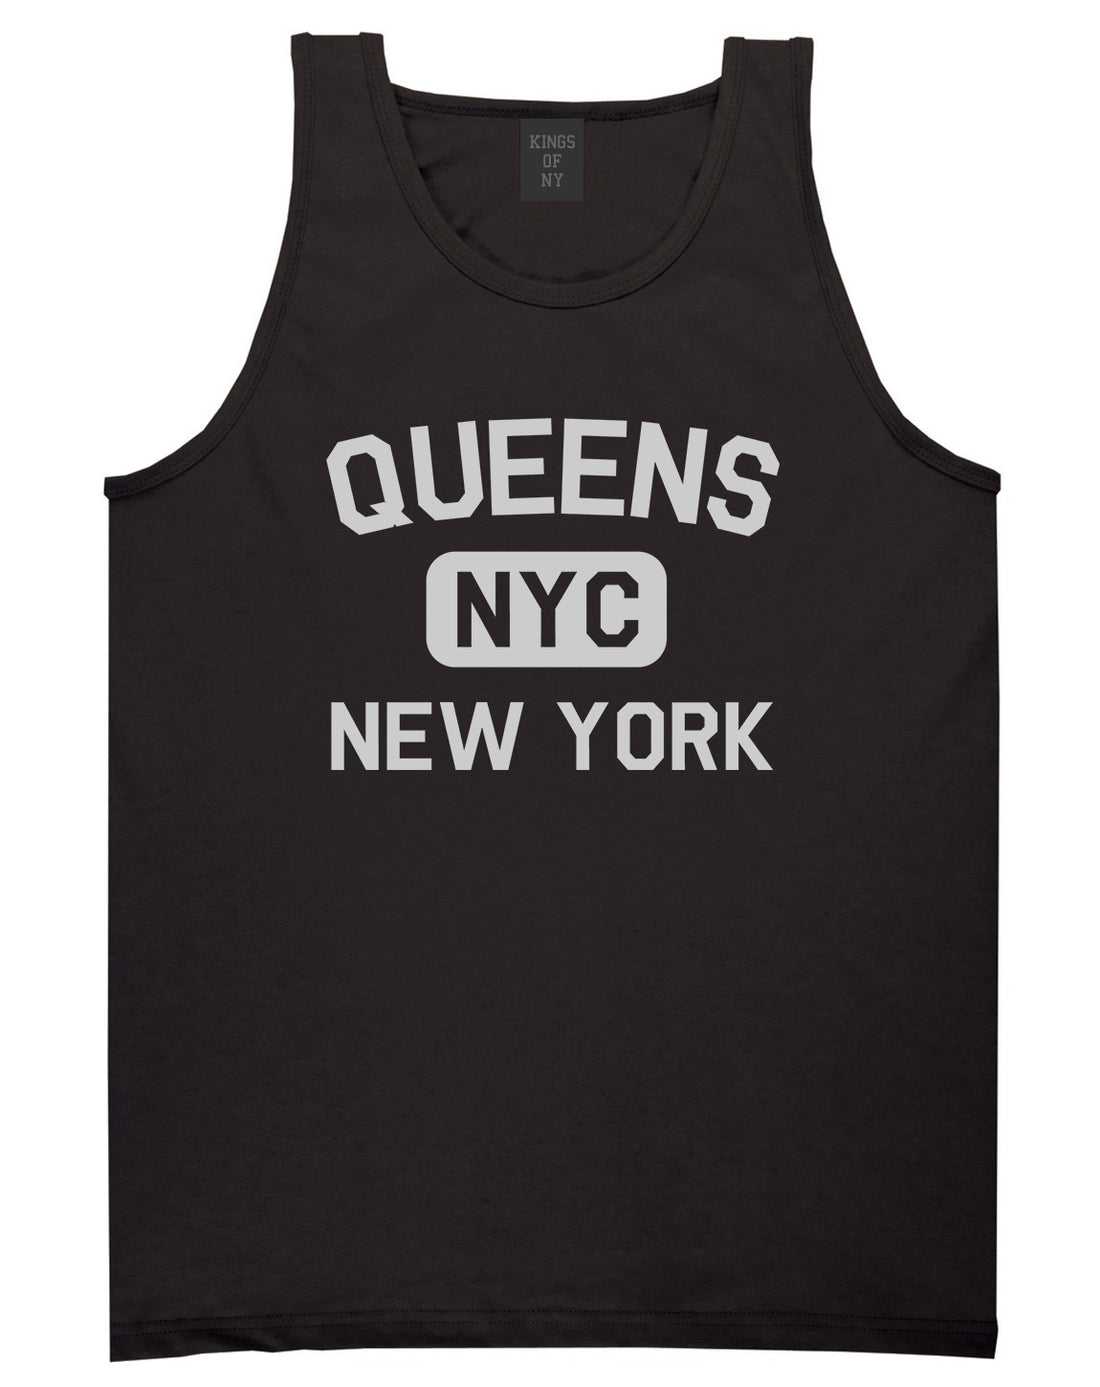 Queens Gym NYC New York Mens Tank Top T-Shirt Black